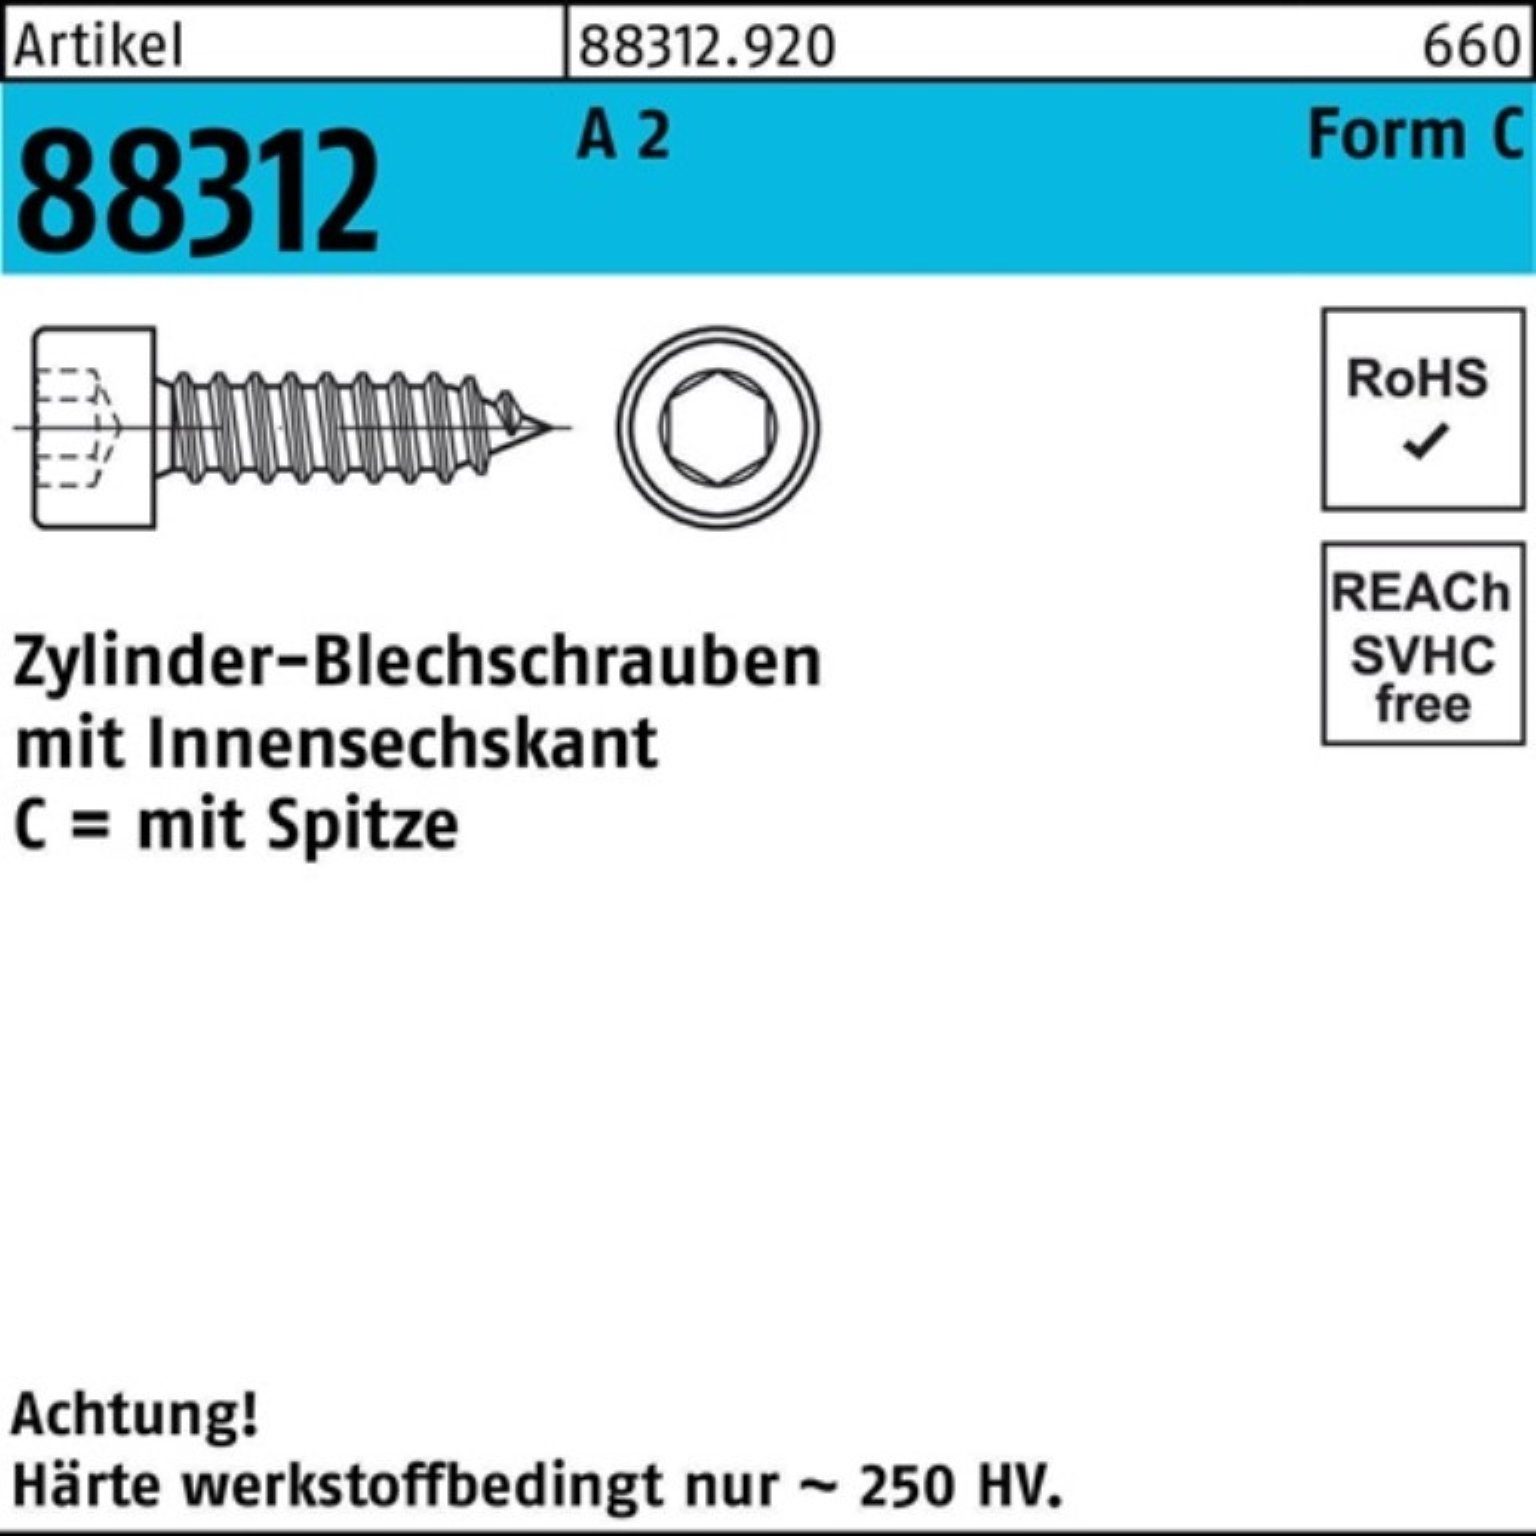 Reyher Blechschraube 200er Pack Zylinderblechschraube R 88312 Spitze/Innen-6kt C 6,3x 22 A